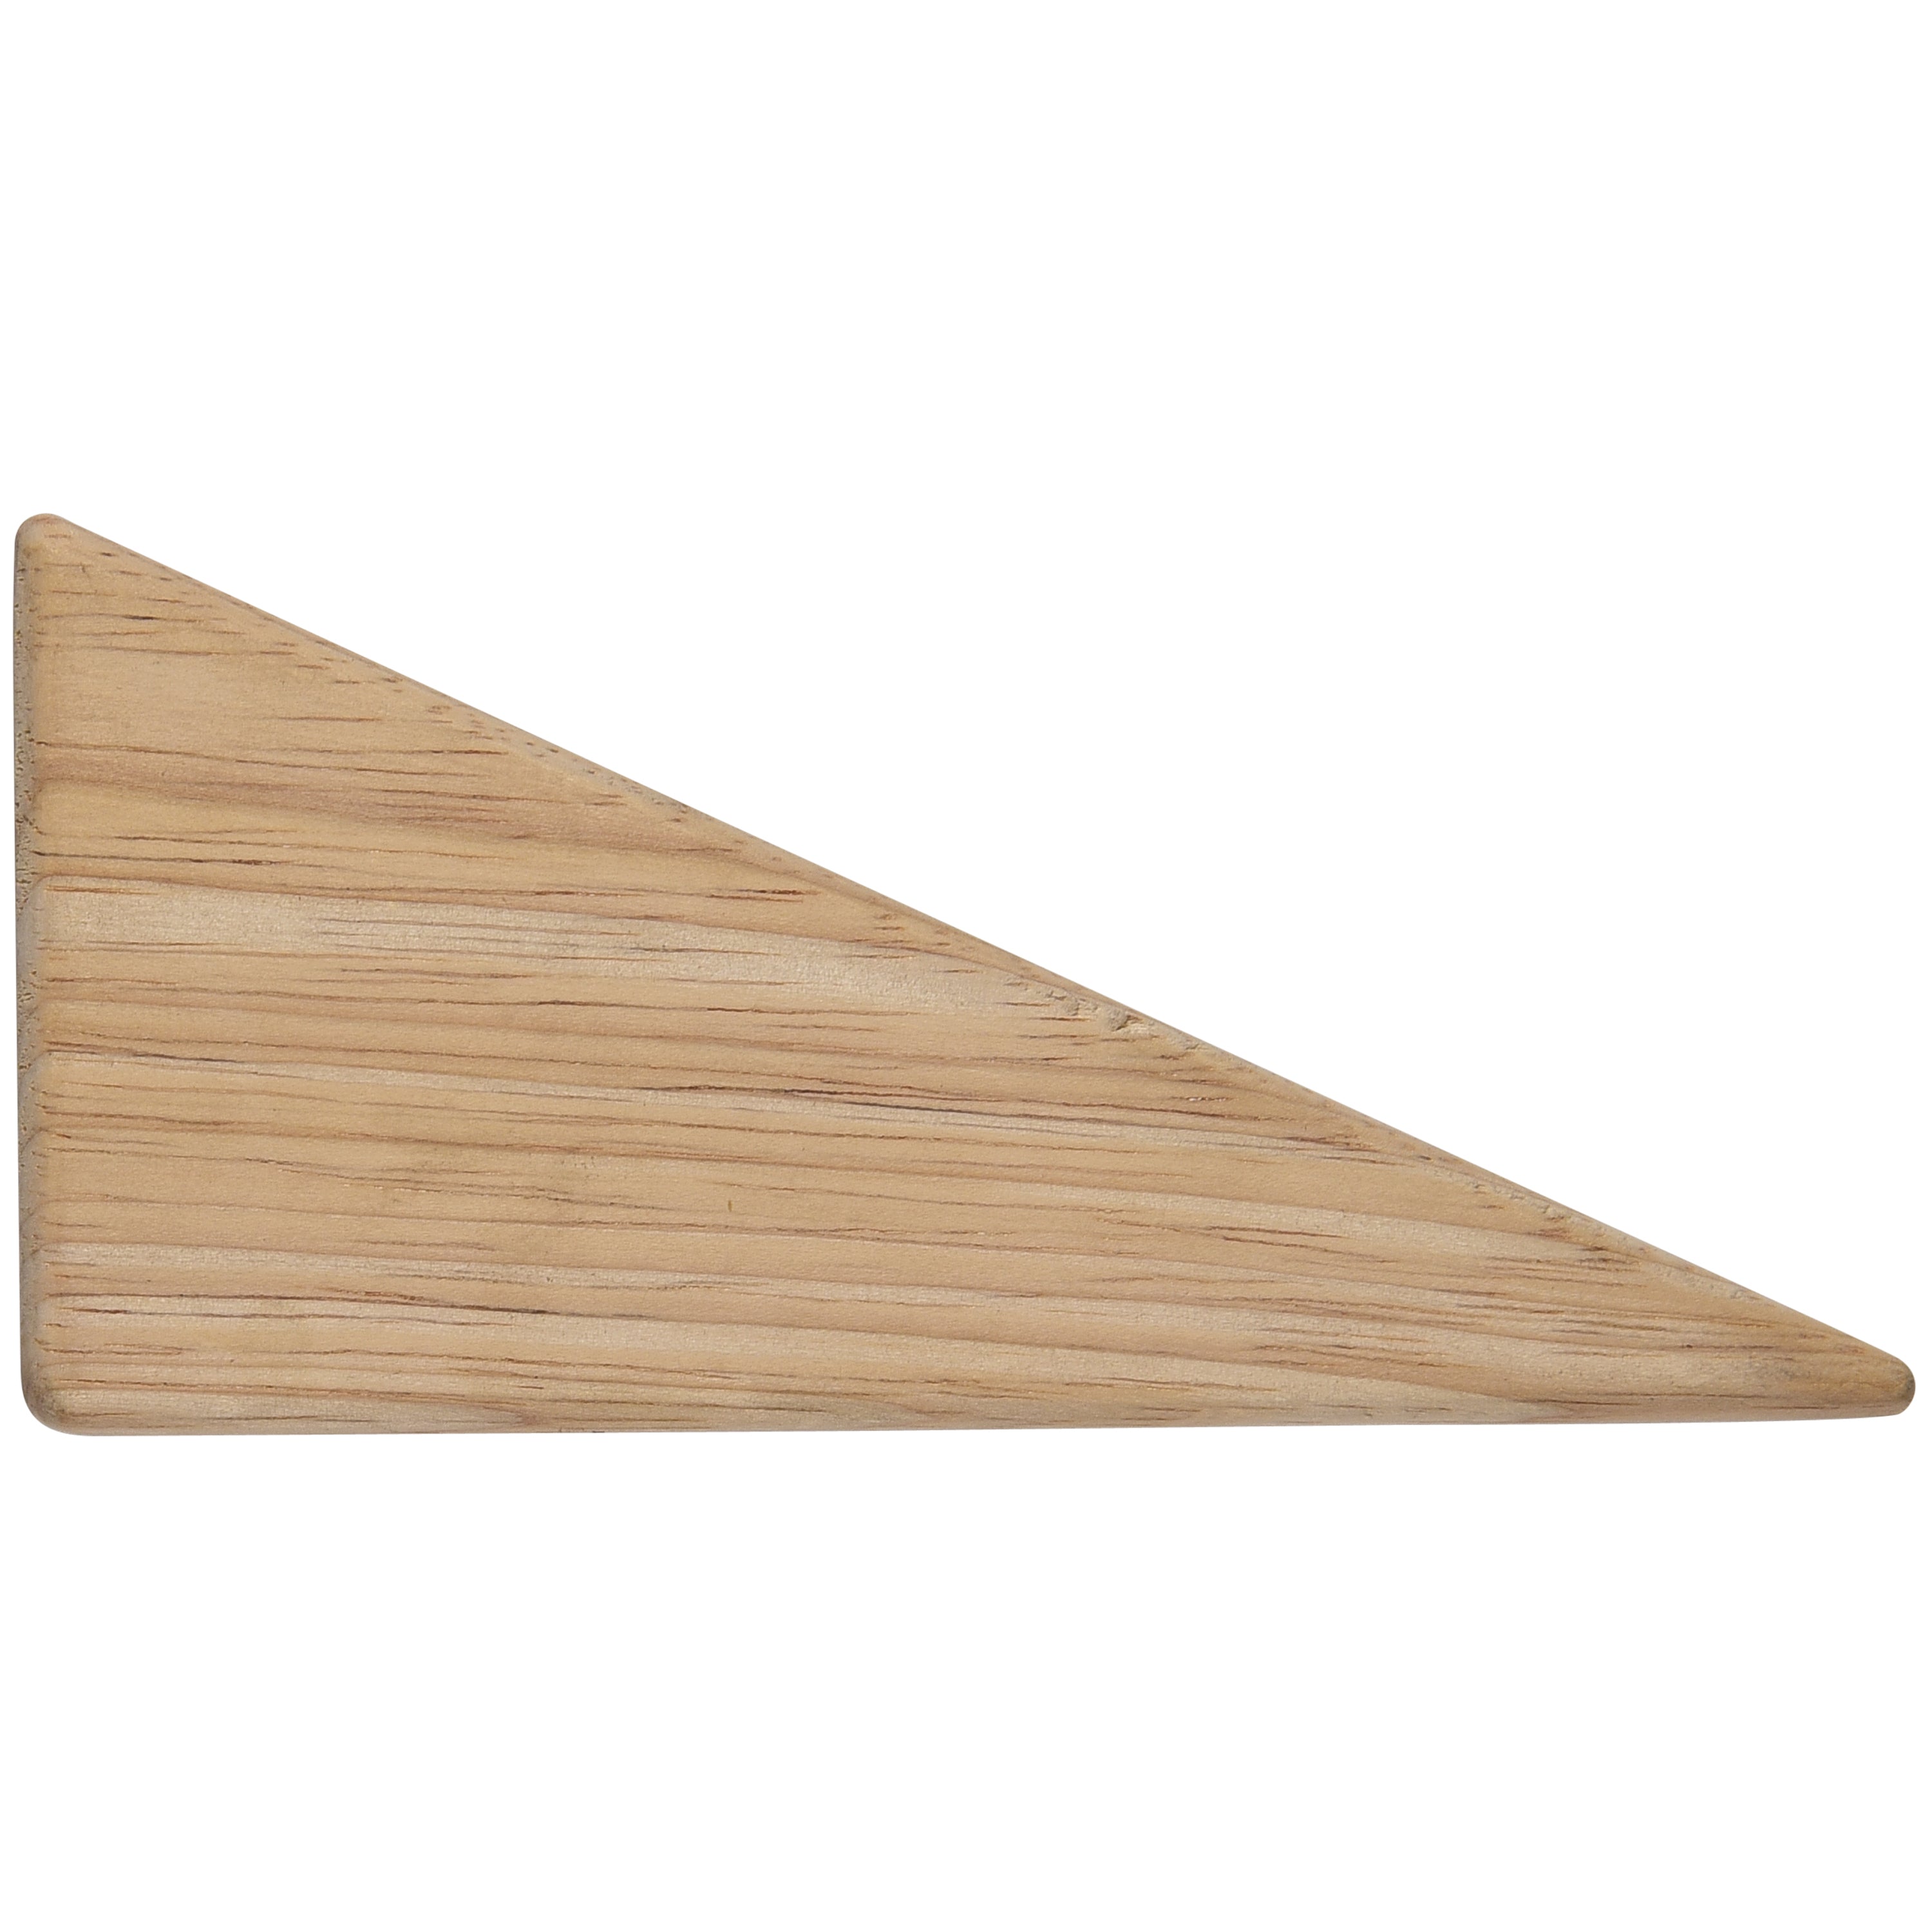 Wood Unit Blocks: Large Triangle Block (Right Angle Triangle)